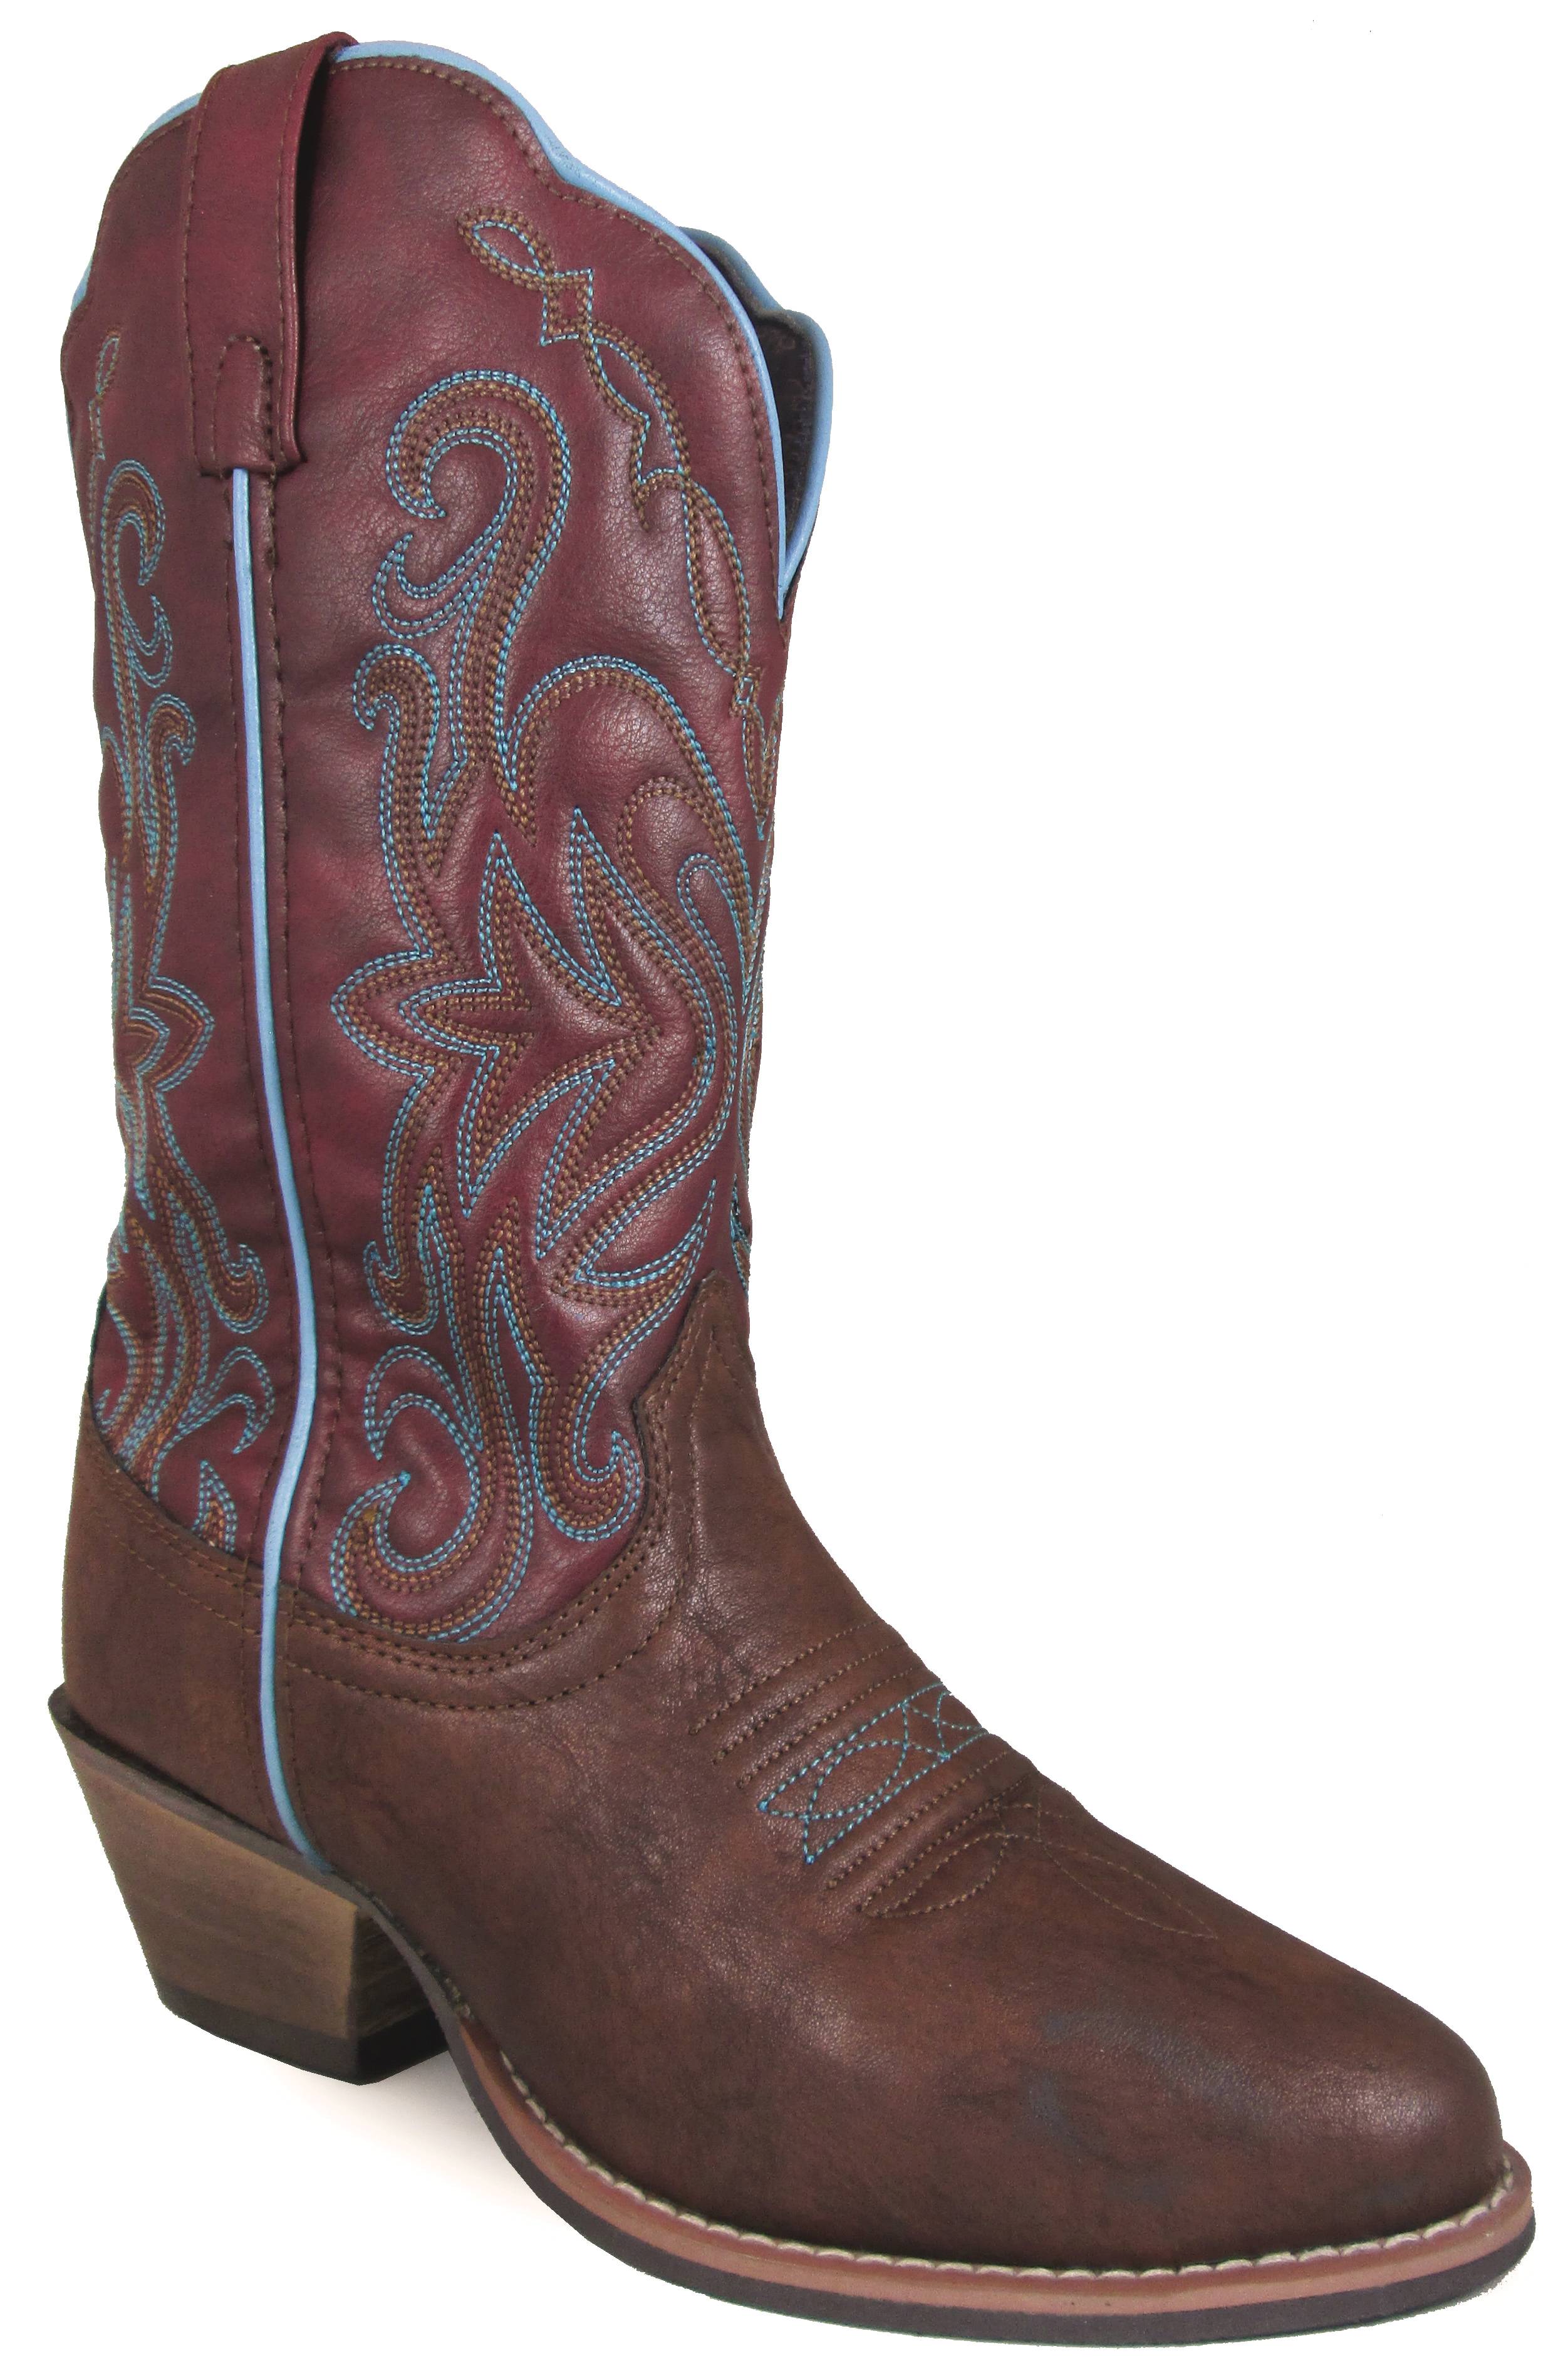 Smoky Mountain Altona Western Boots - Ladies  - Brown/Rust